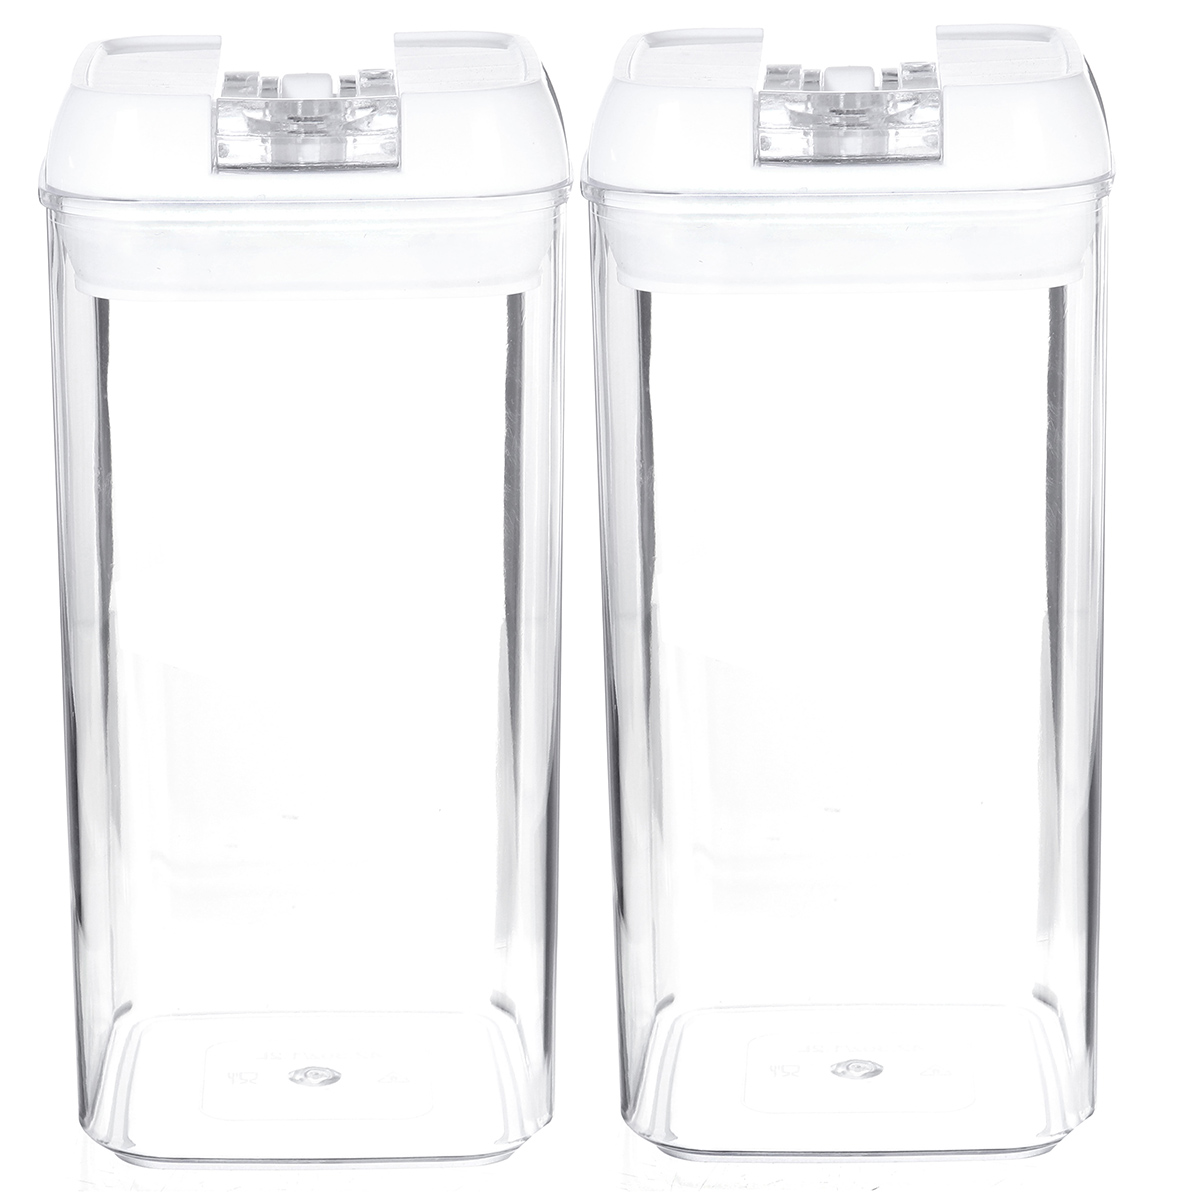 6pcs-Airtight-Refrigerator-Food-Container-Storage-with-Lock-Lids-Plastic-Transparent-Multigrain-Cont-1752734-18